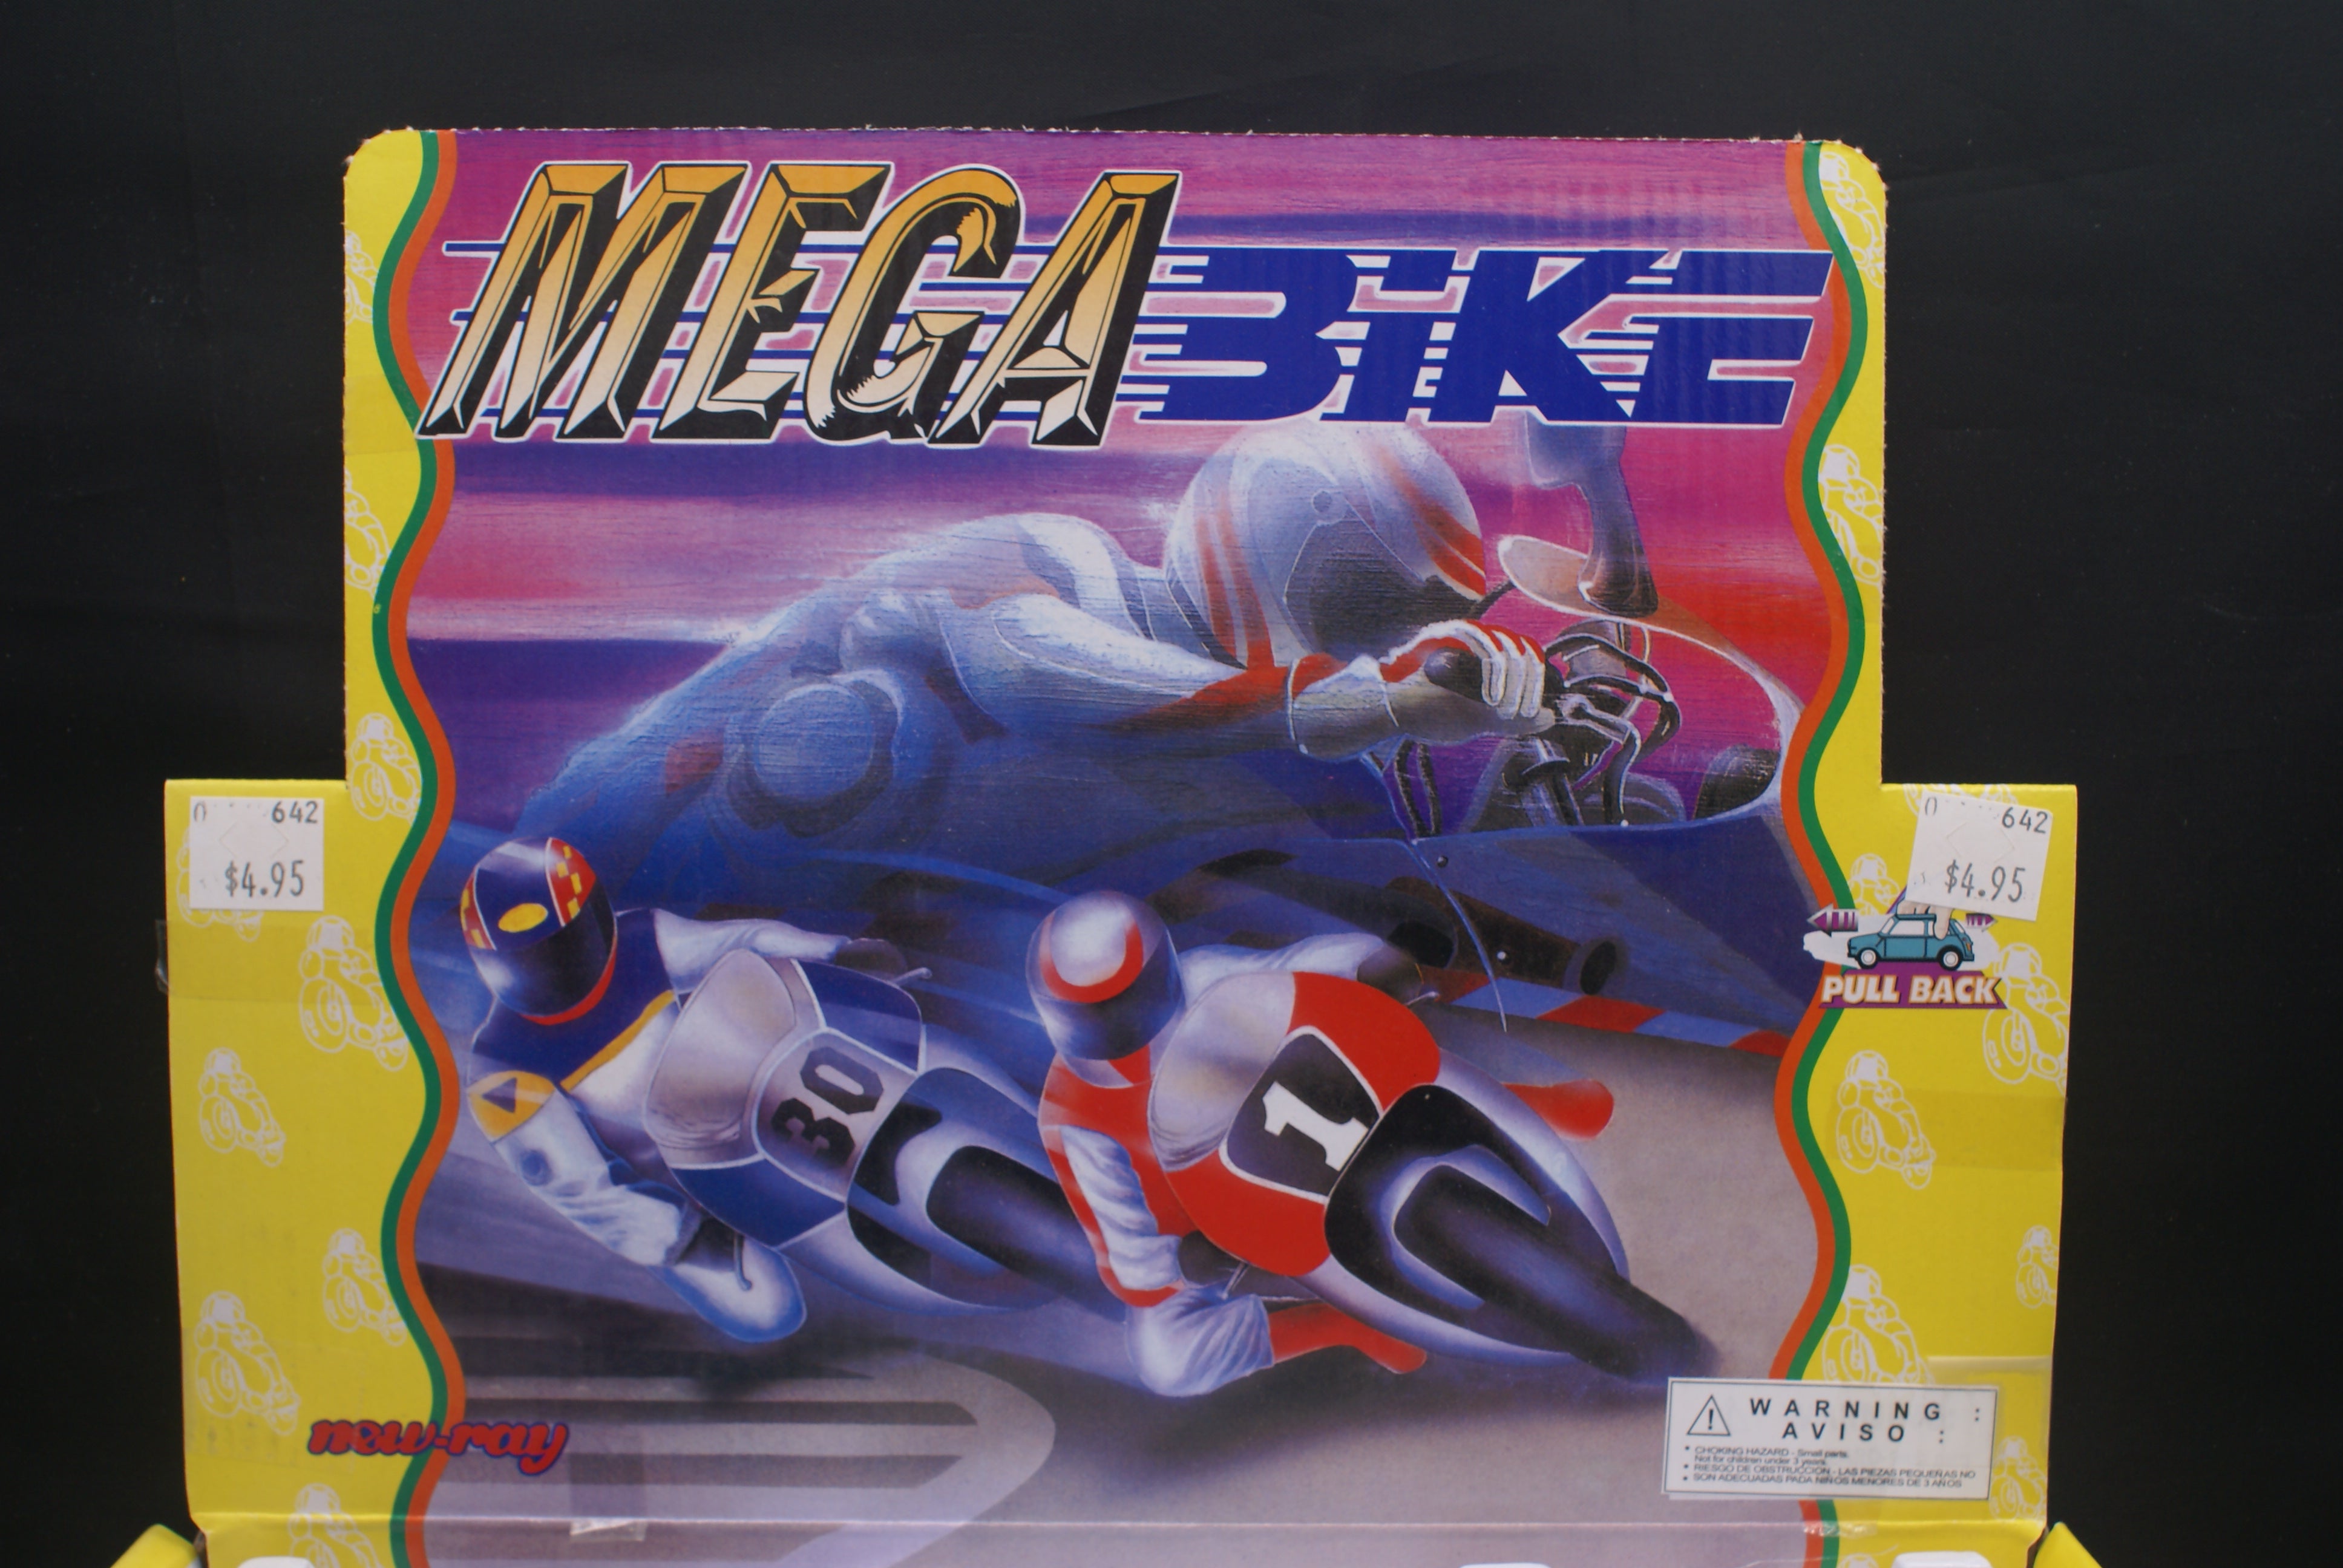 Mega Bike models